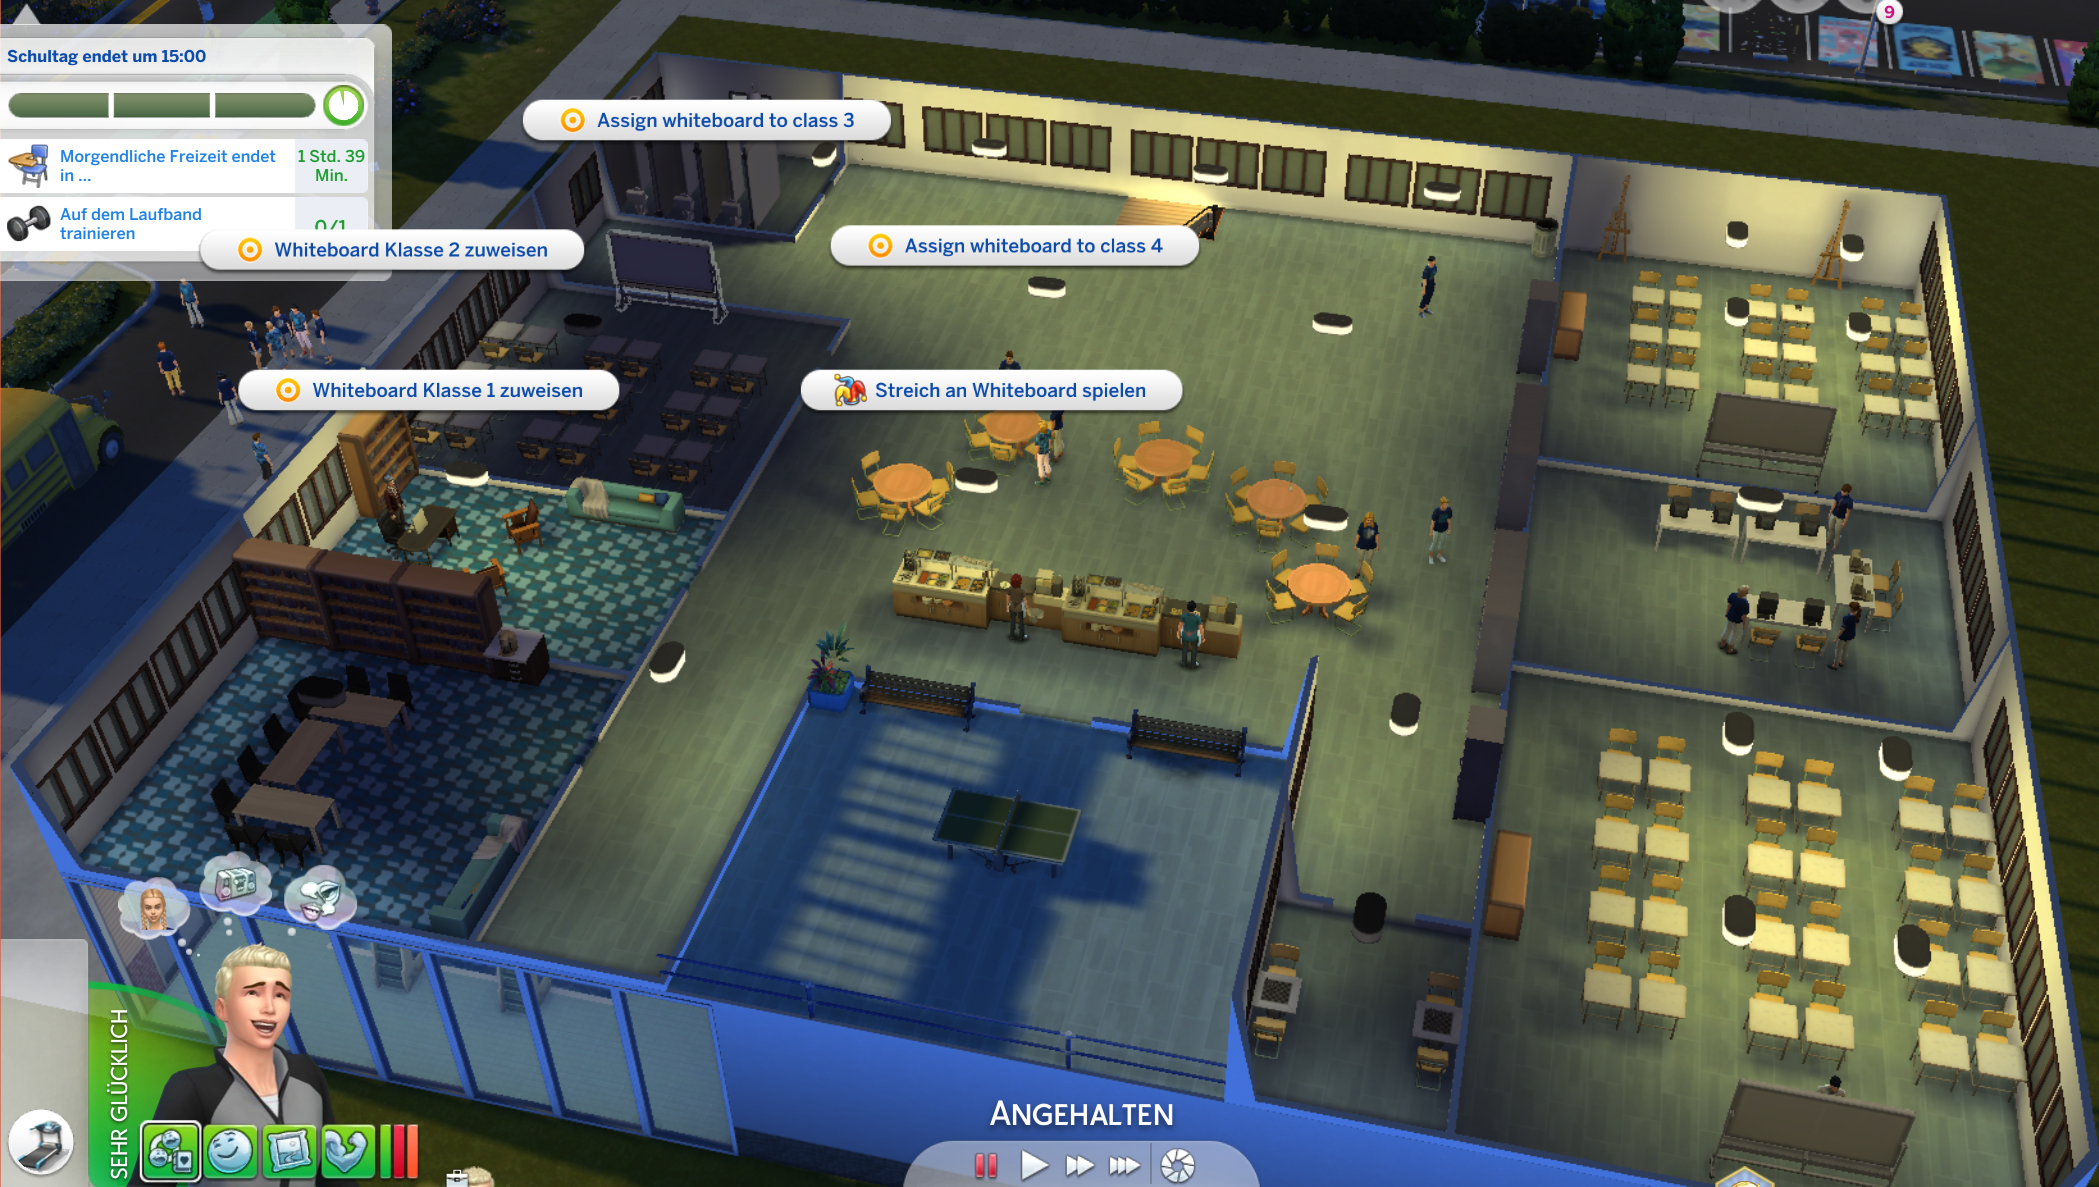 High School More Classmates - The Sims 4 Mods - CurseForge